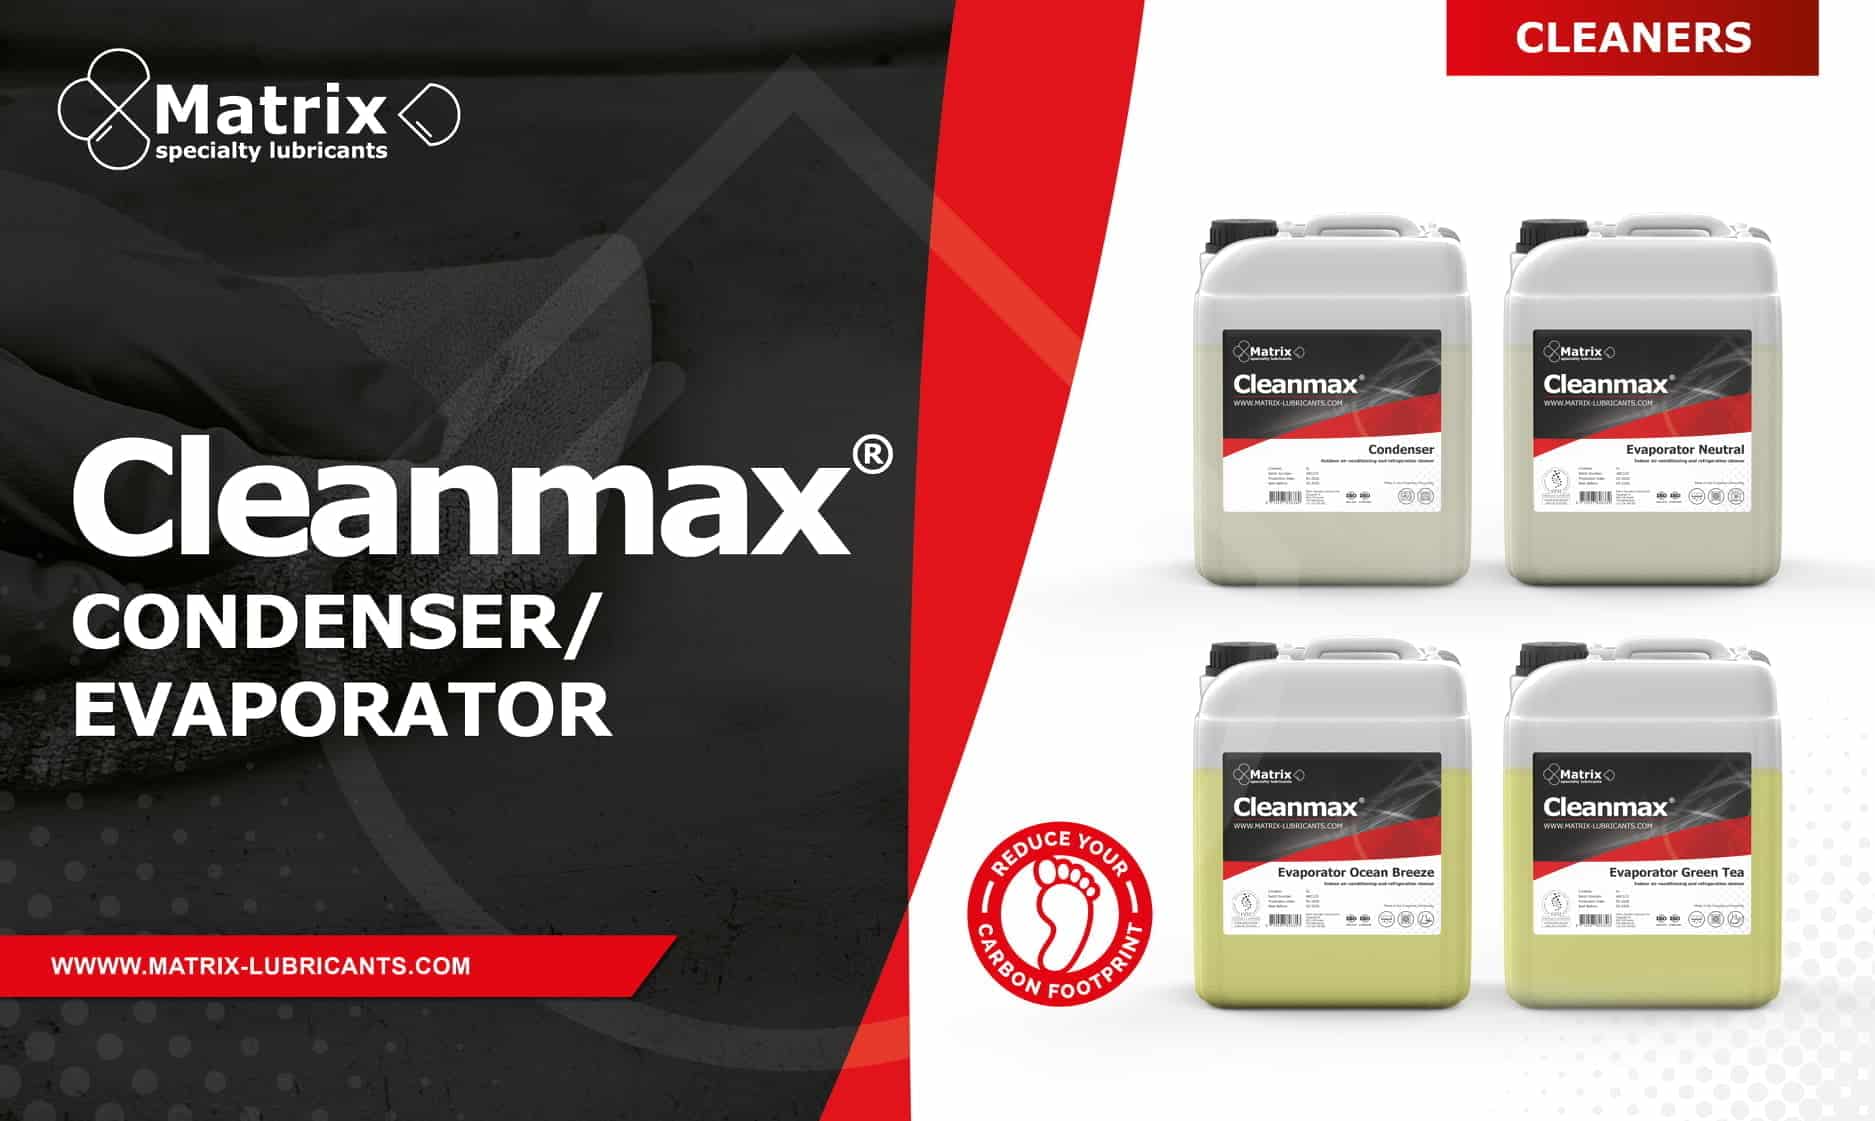 Matrix specialty lubricants' Cleanmax Condenser/Evaporator cleaners